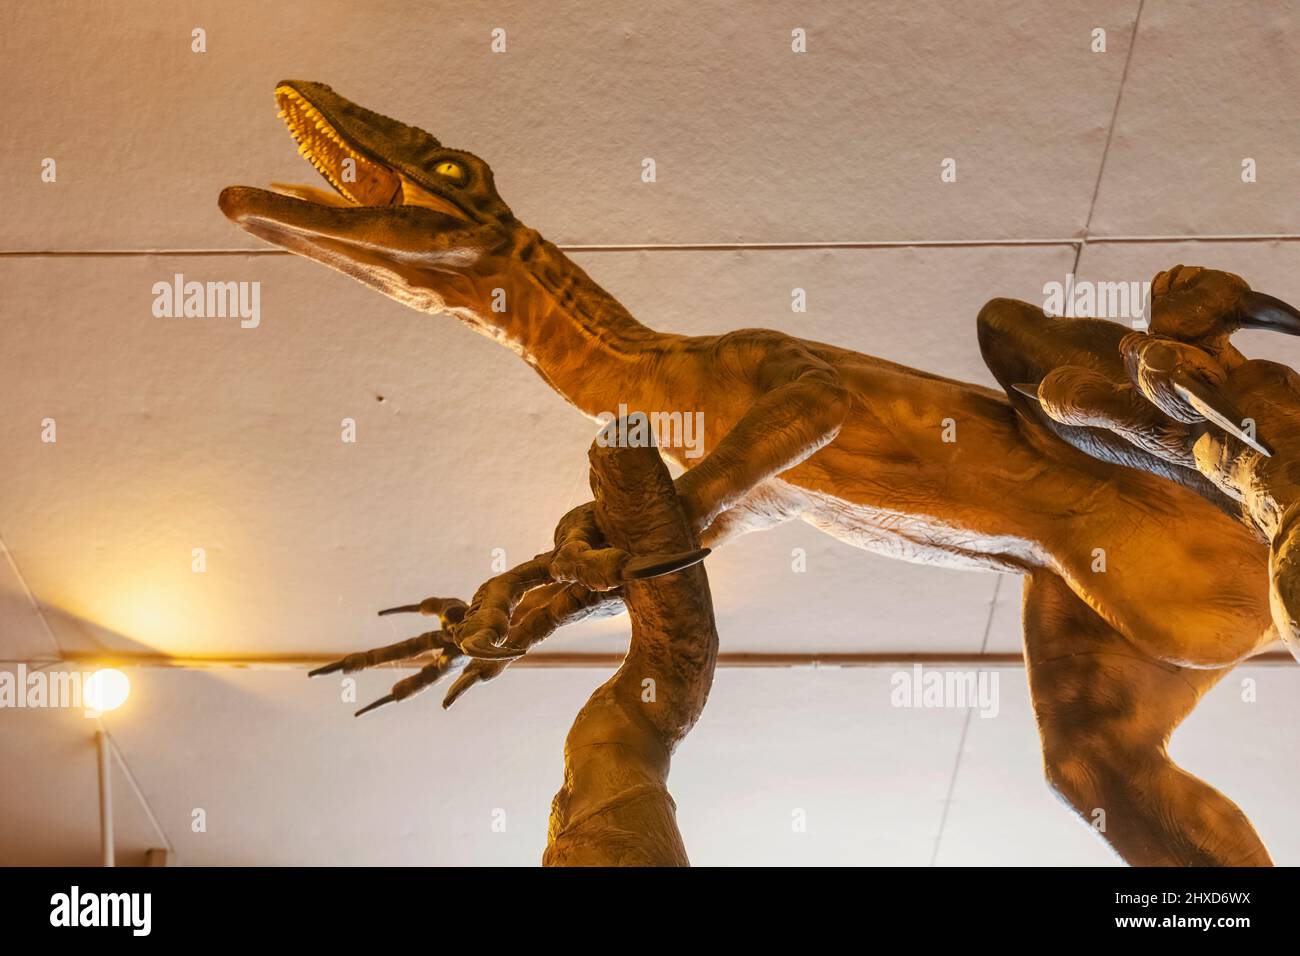 England, Dorset, Dorchester, The Dinosaur Museum, Model of a Deinonychus Active Predator Dinosaur Stock Photo